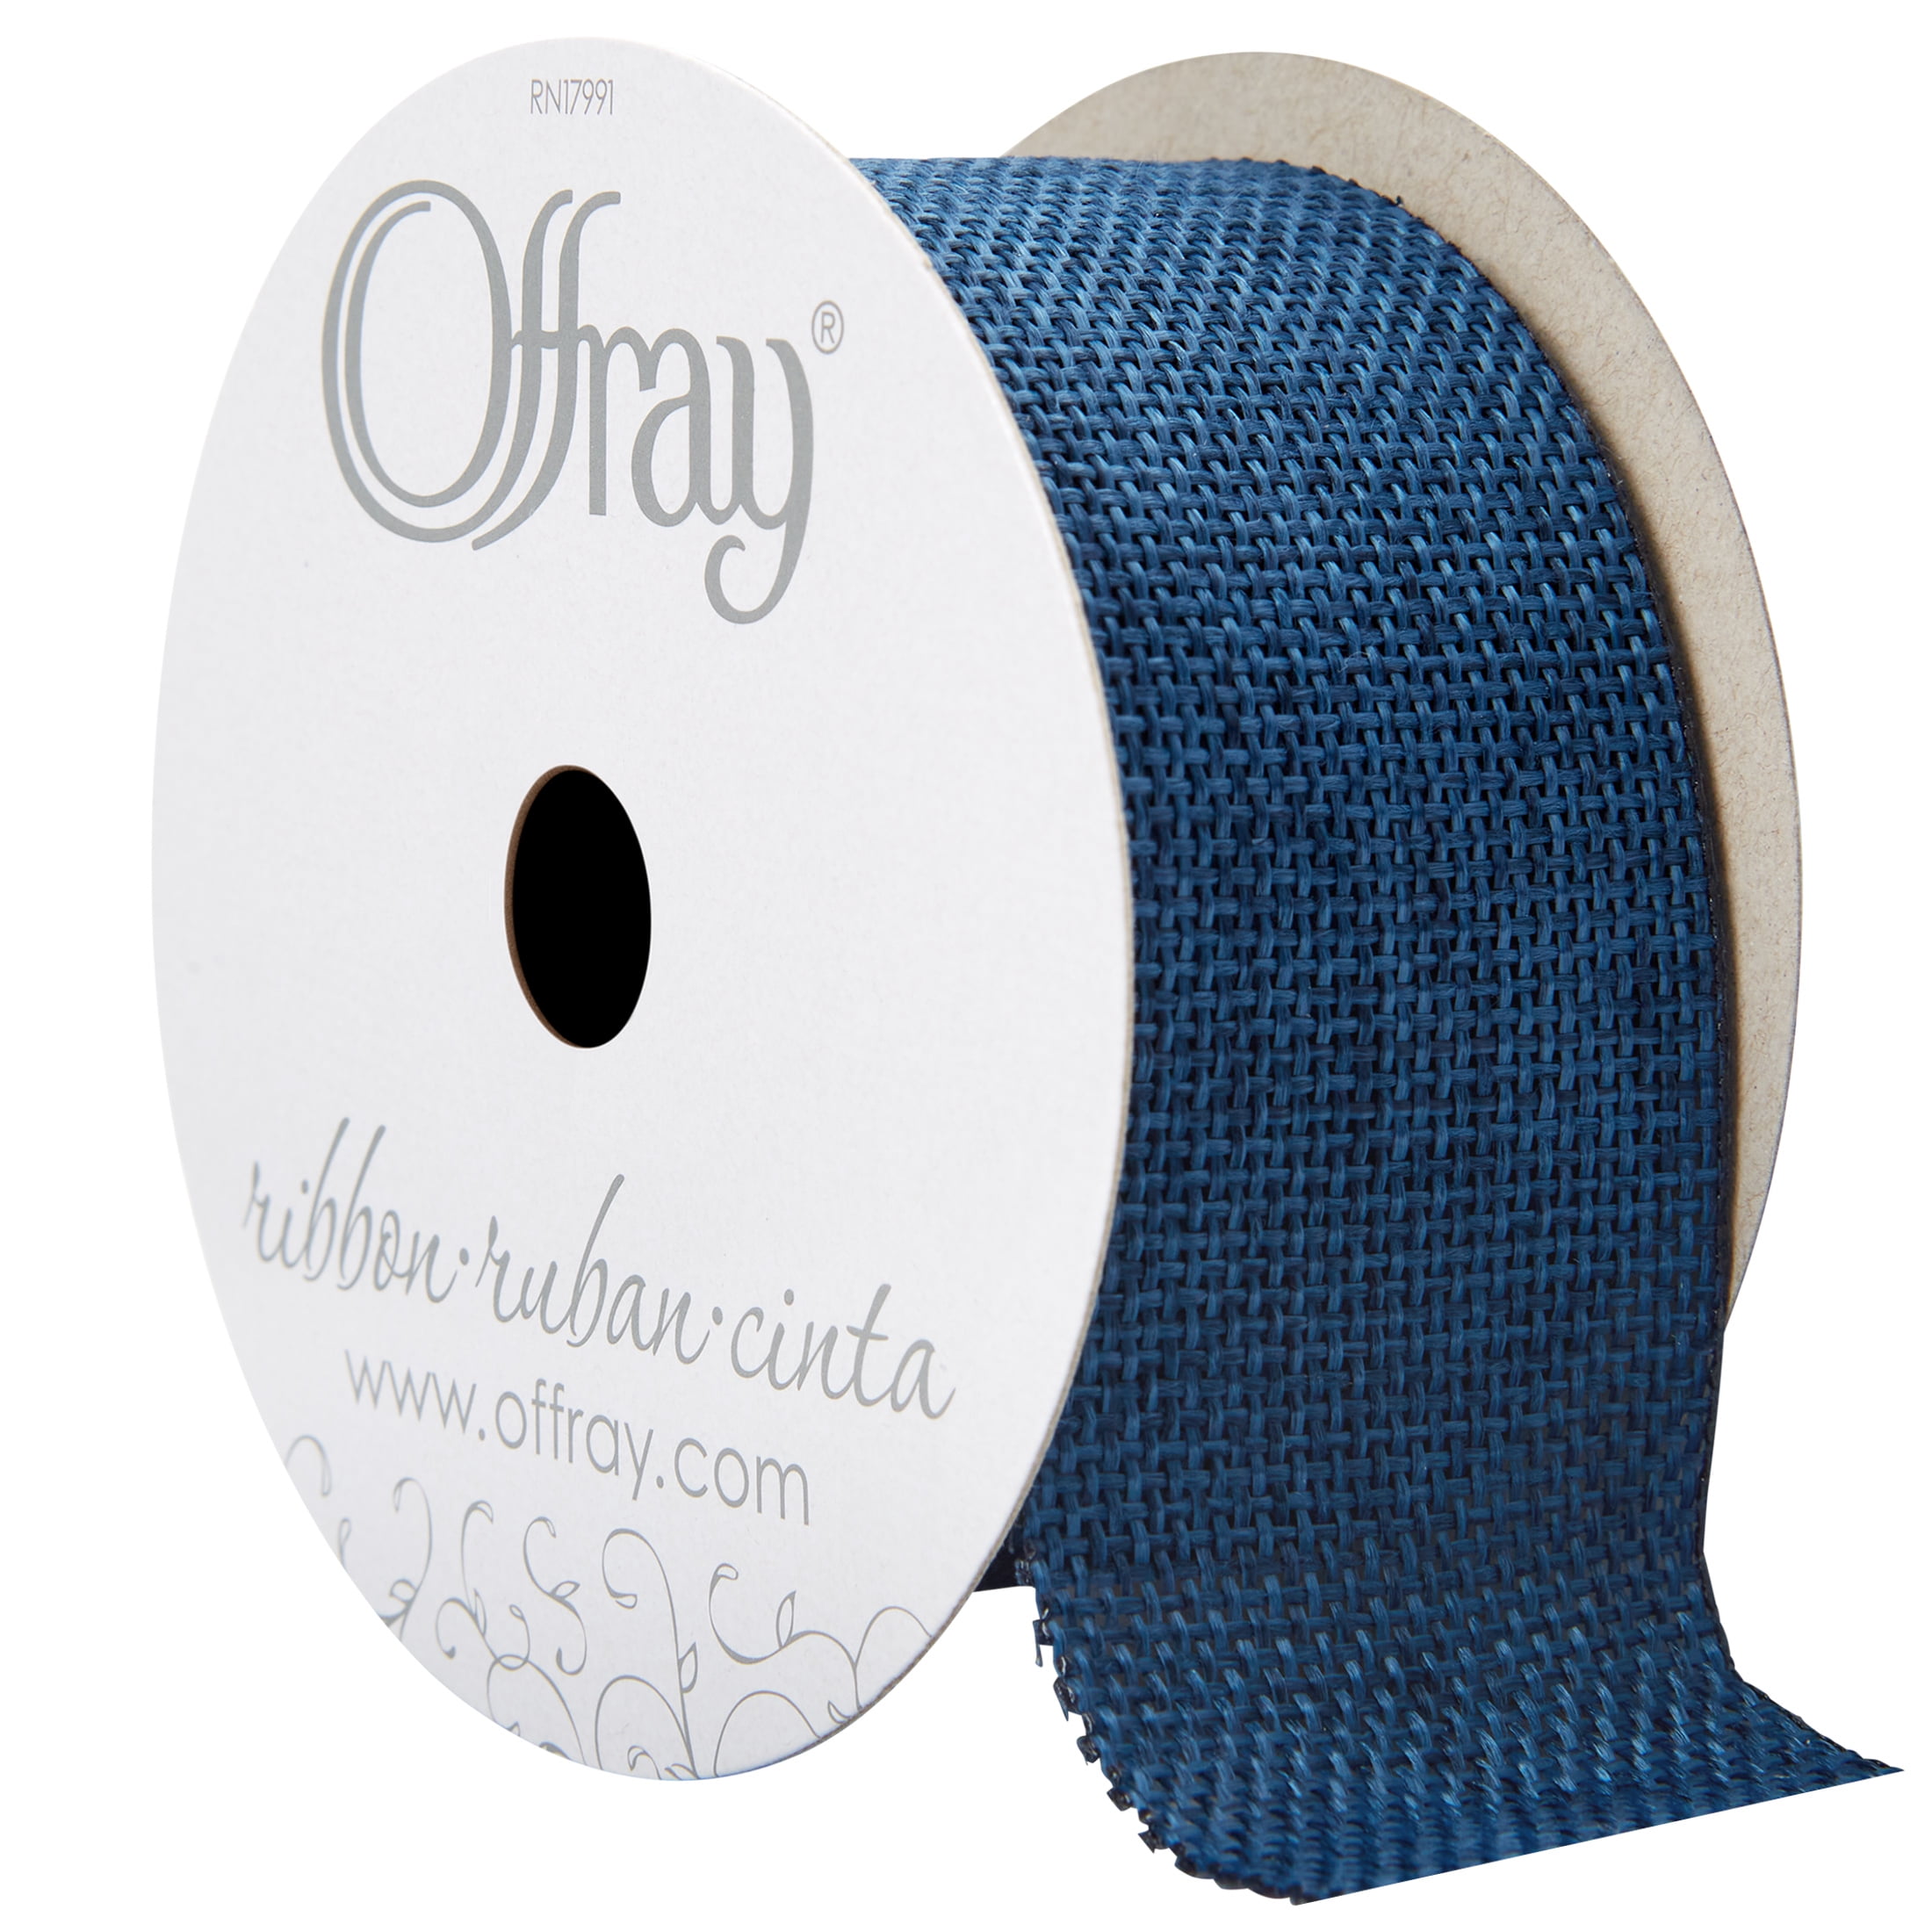 Offray Ribbon, Denim Blue 1 1/2 inch Woven Burlap Woven Ribbon, 9 feet